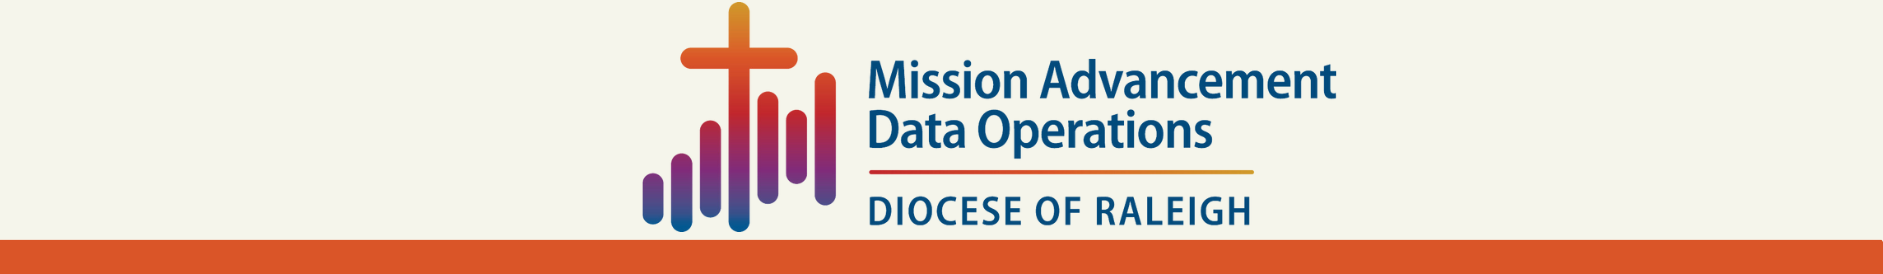 Mission Advancement / Data Operations